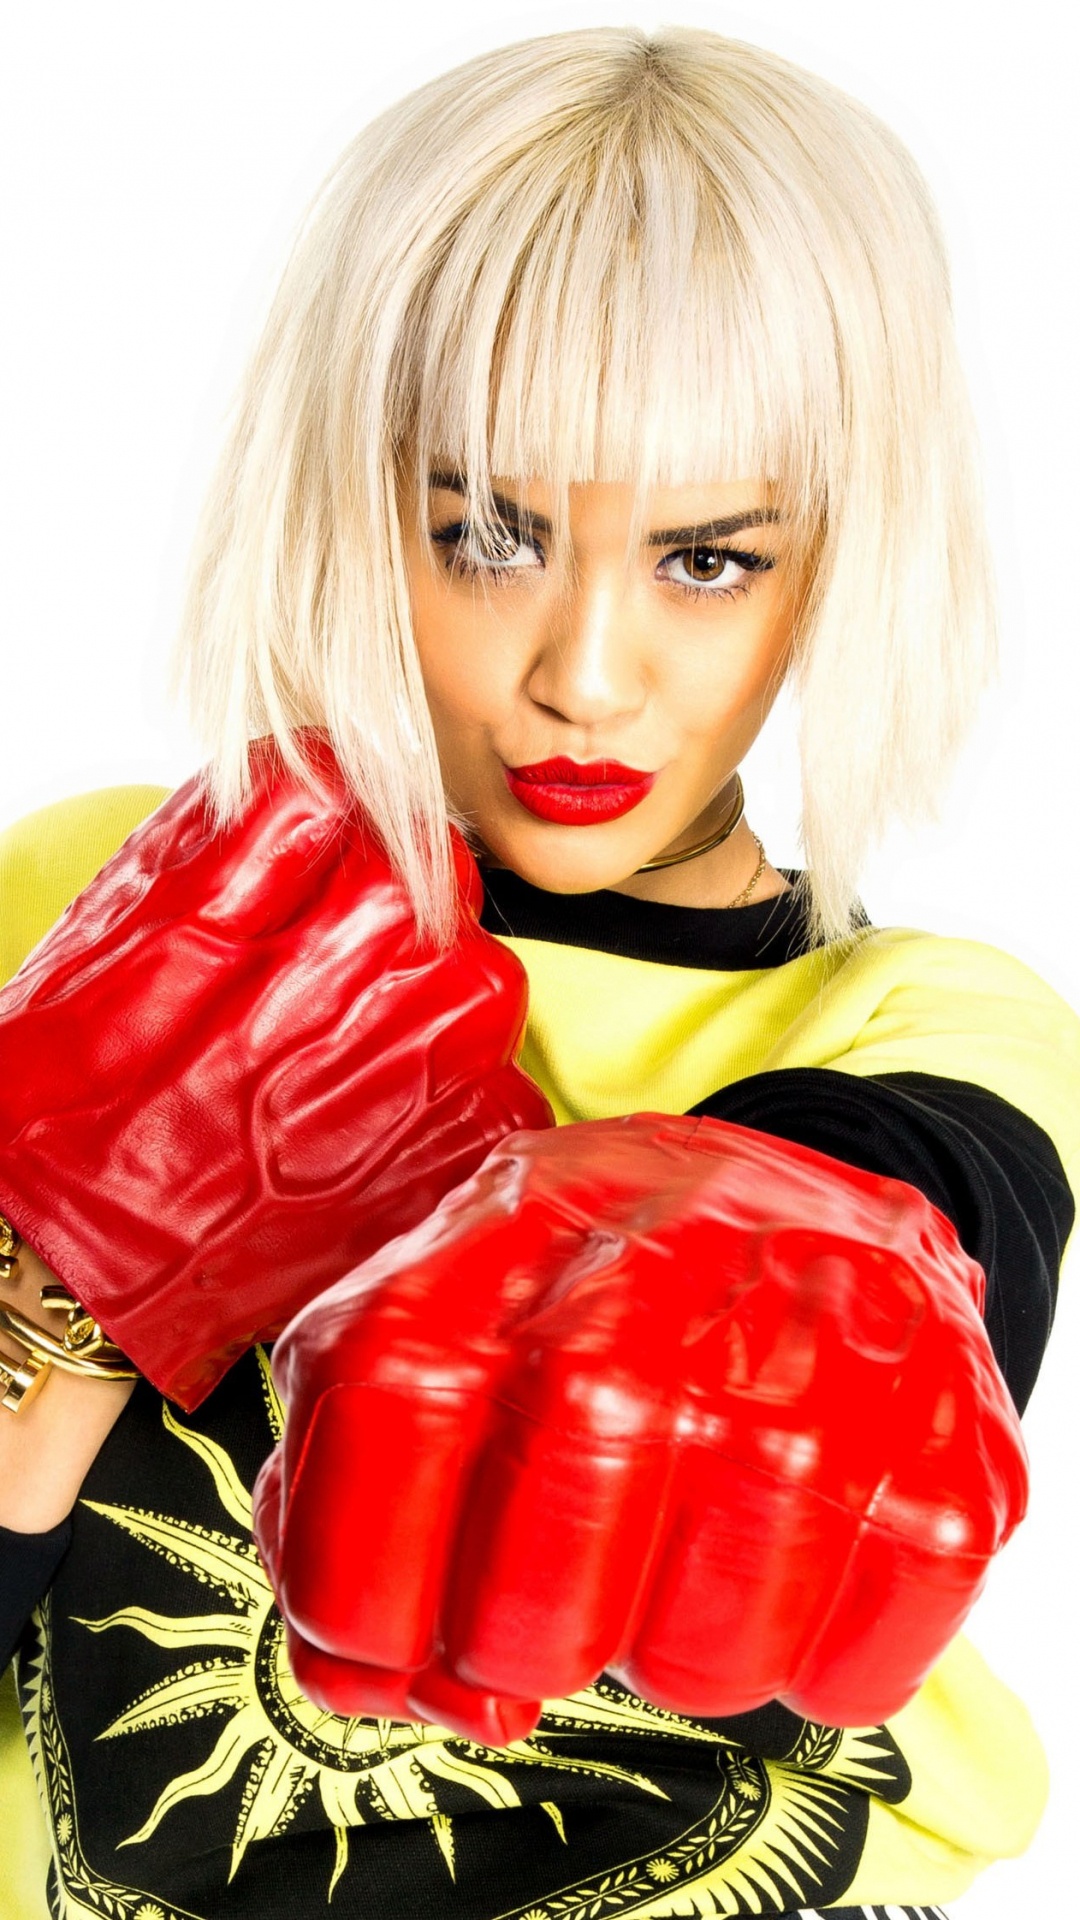 Handschuh, Rita Ora, Boxhandschuh, Boxing Equipment, Blonde. Wallpaper in 1080x1920 Resolution